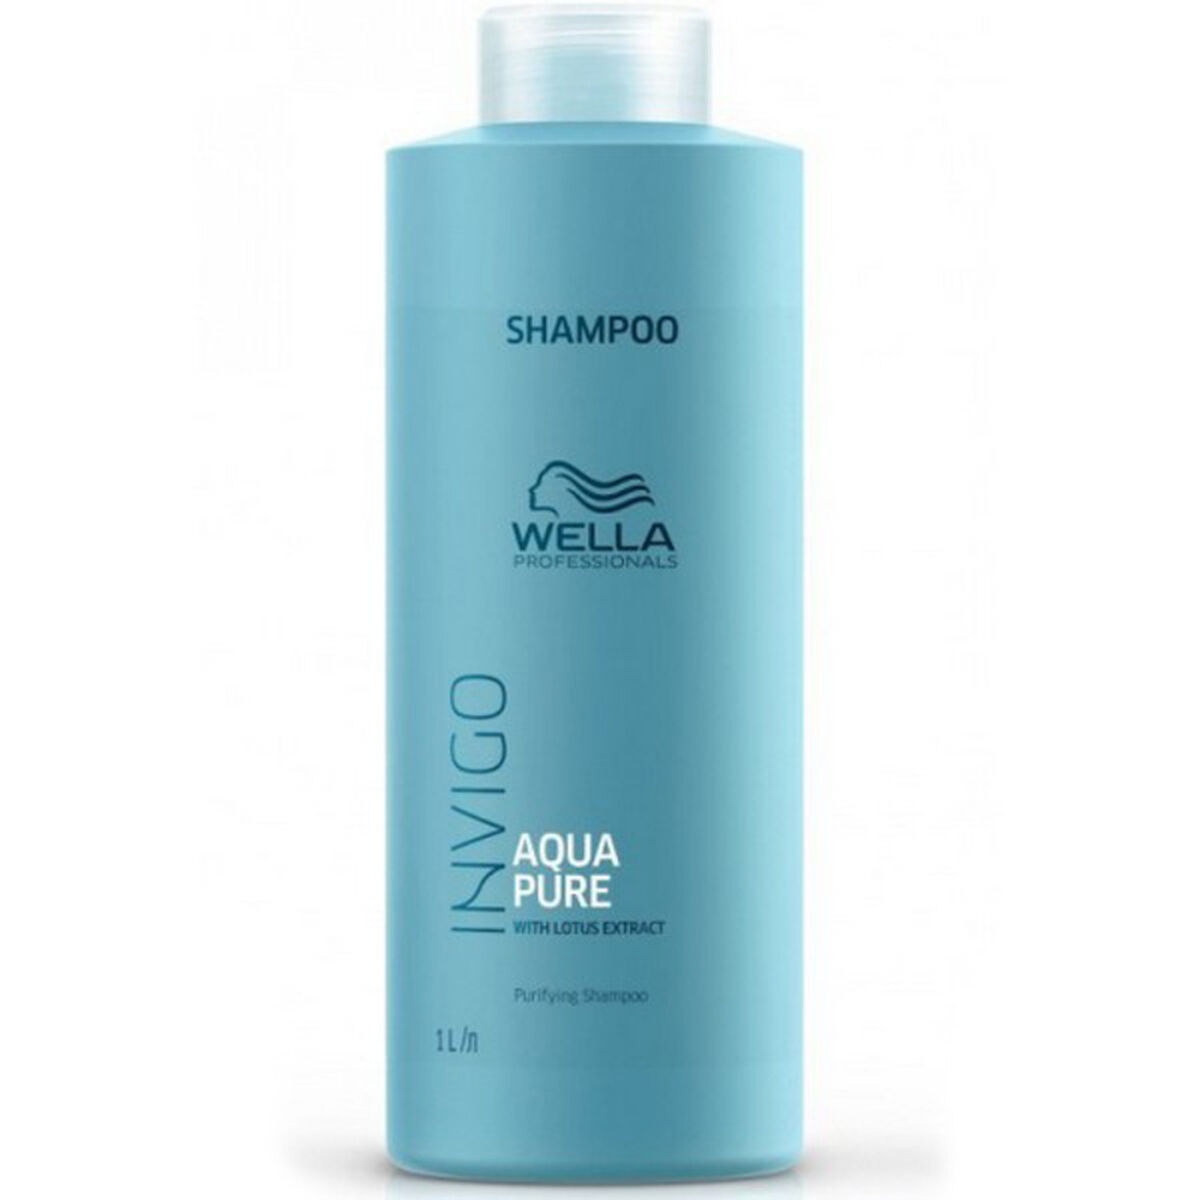 Shampoo Invigo Aqua Pure Wella